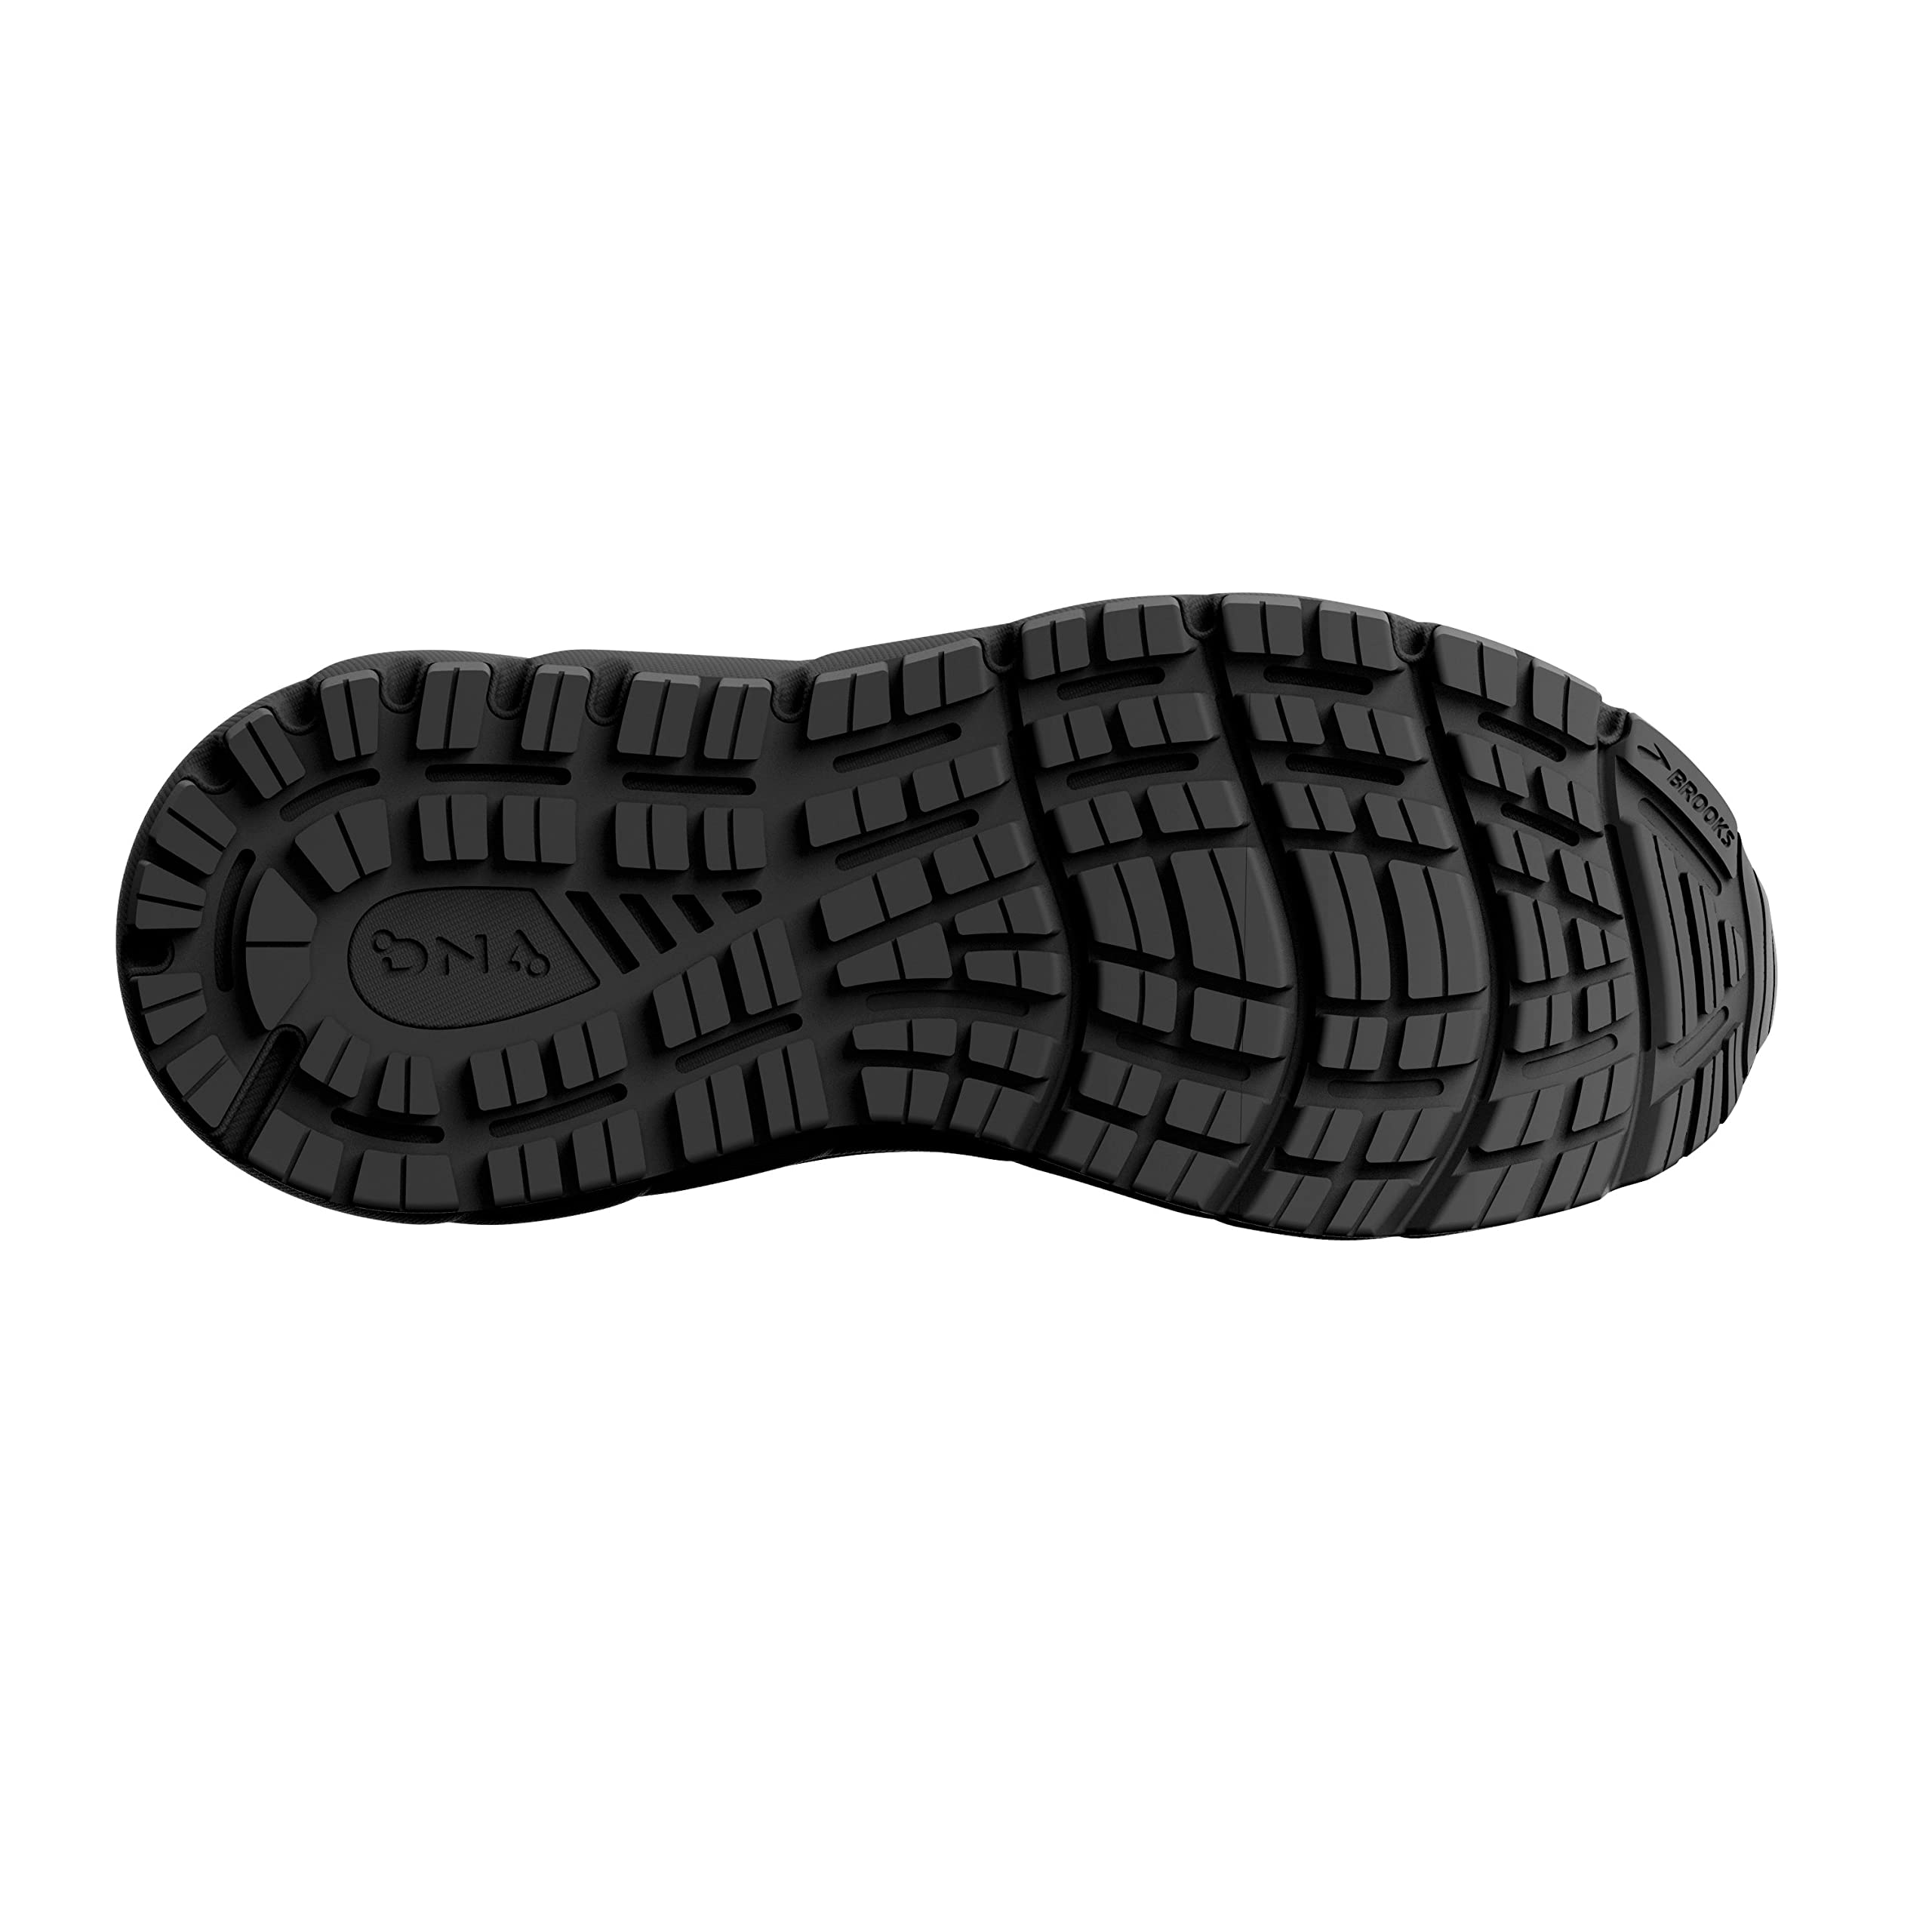 Brooks Men's Addiction GTS 15 Supportive Running Shoe